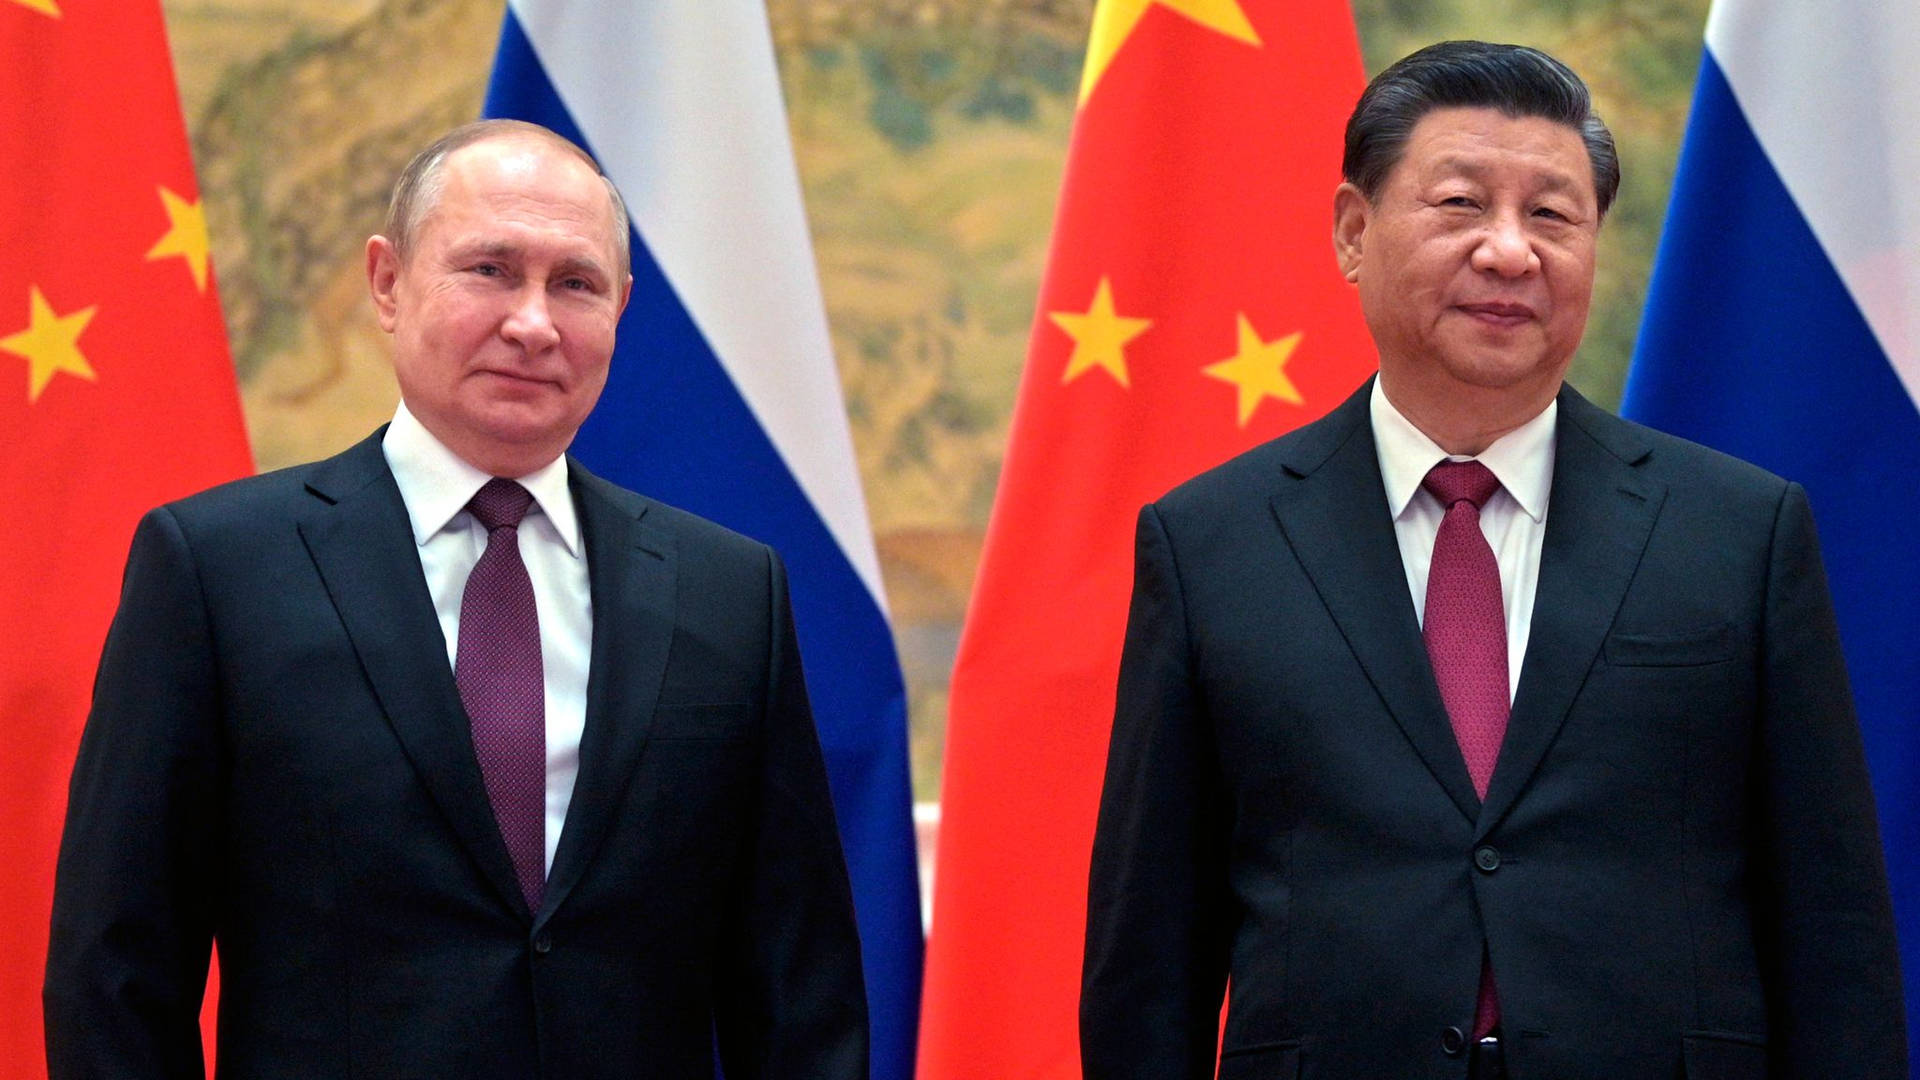 Half-body Photo Vladimir Putin And Xi Jinping Picture